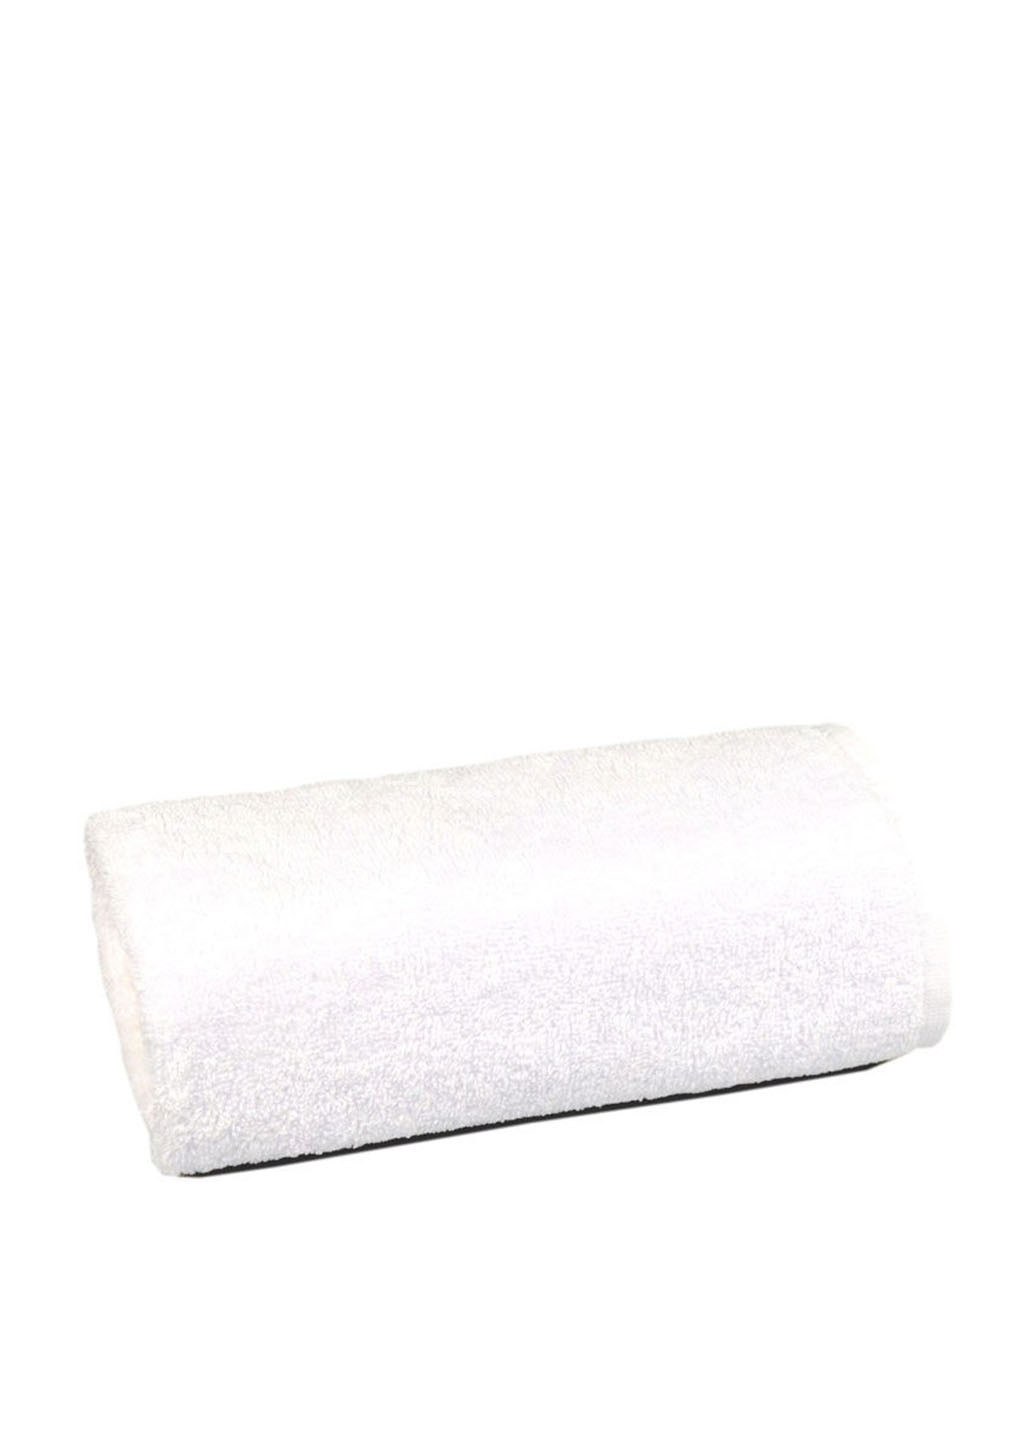 Altex полотенце, 50х90 см однотонный белый производство - Индия